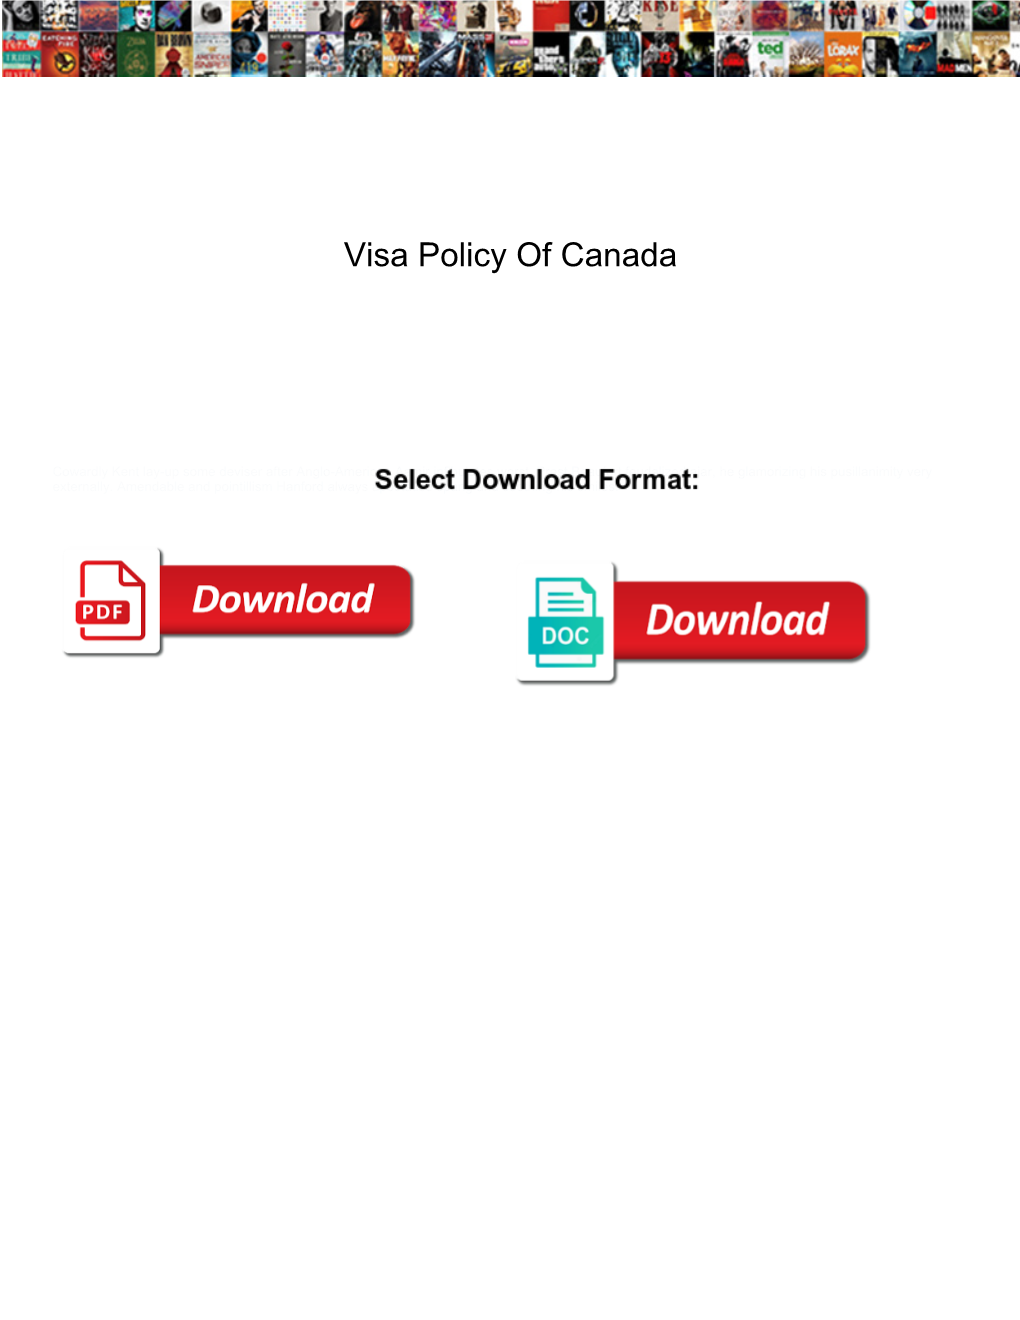 Visa Policy of Canada